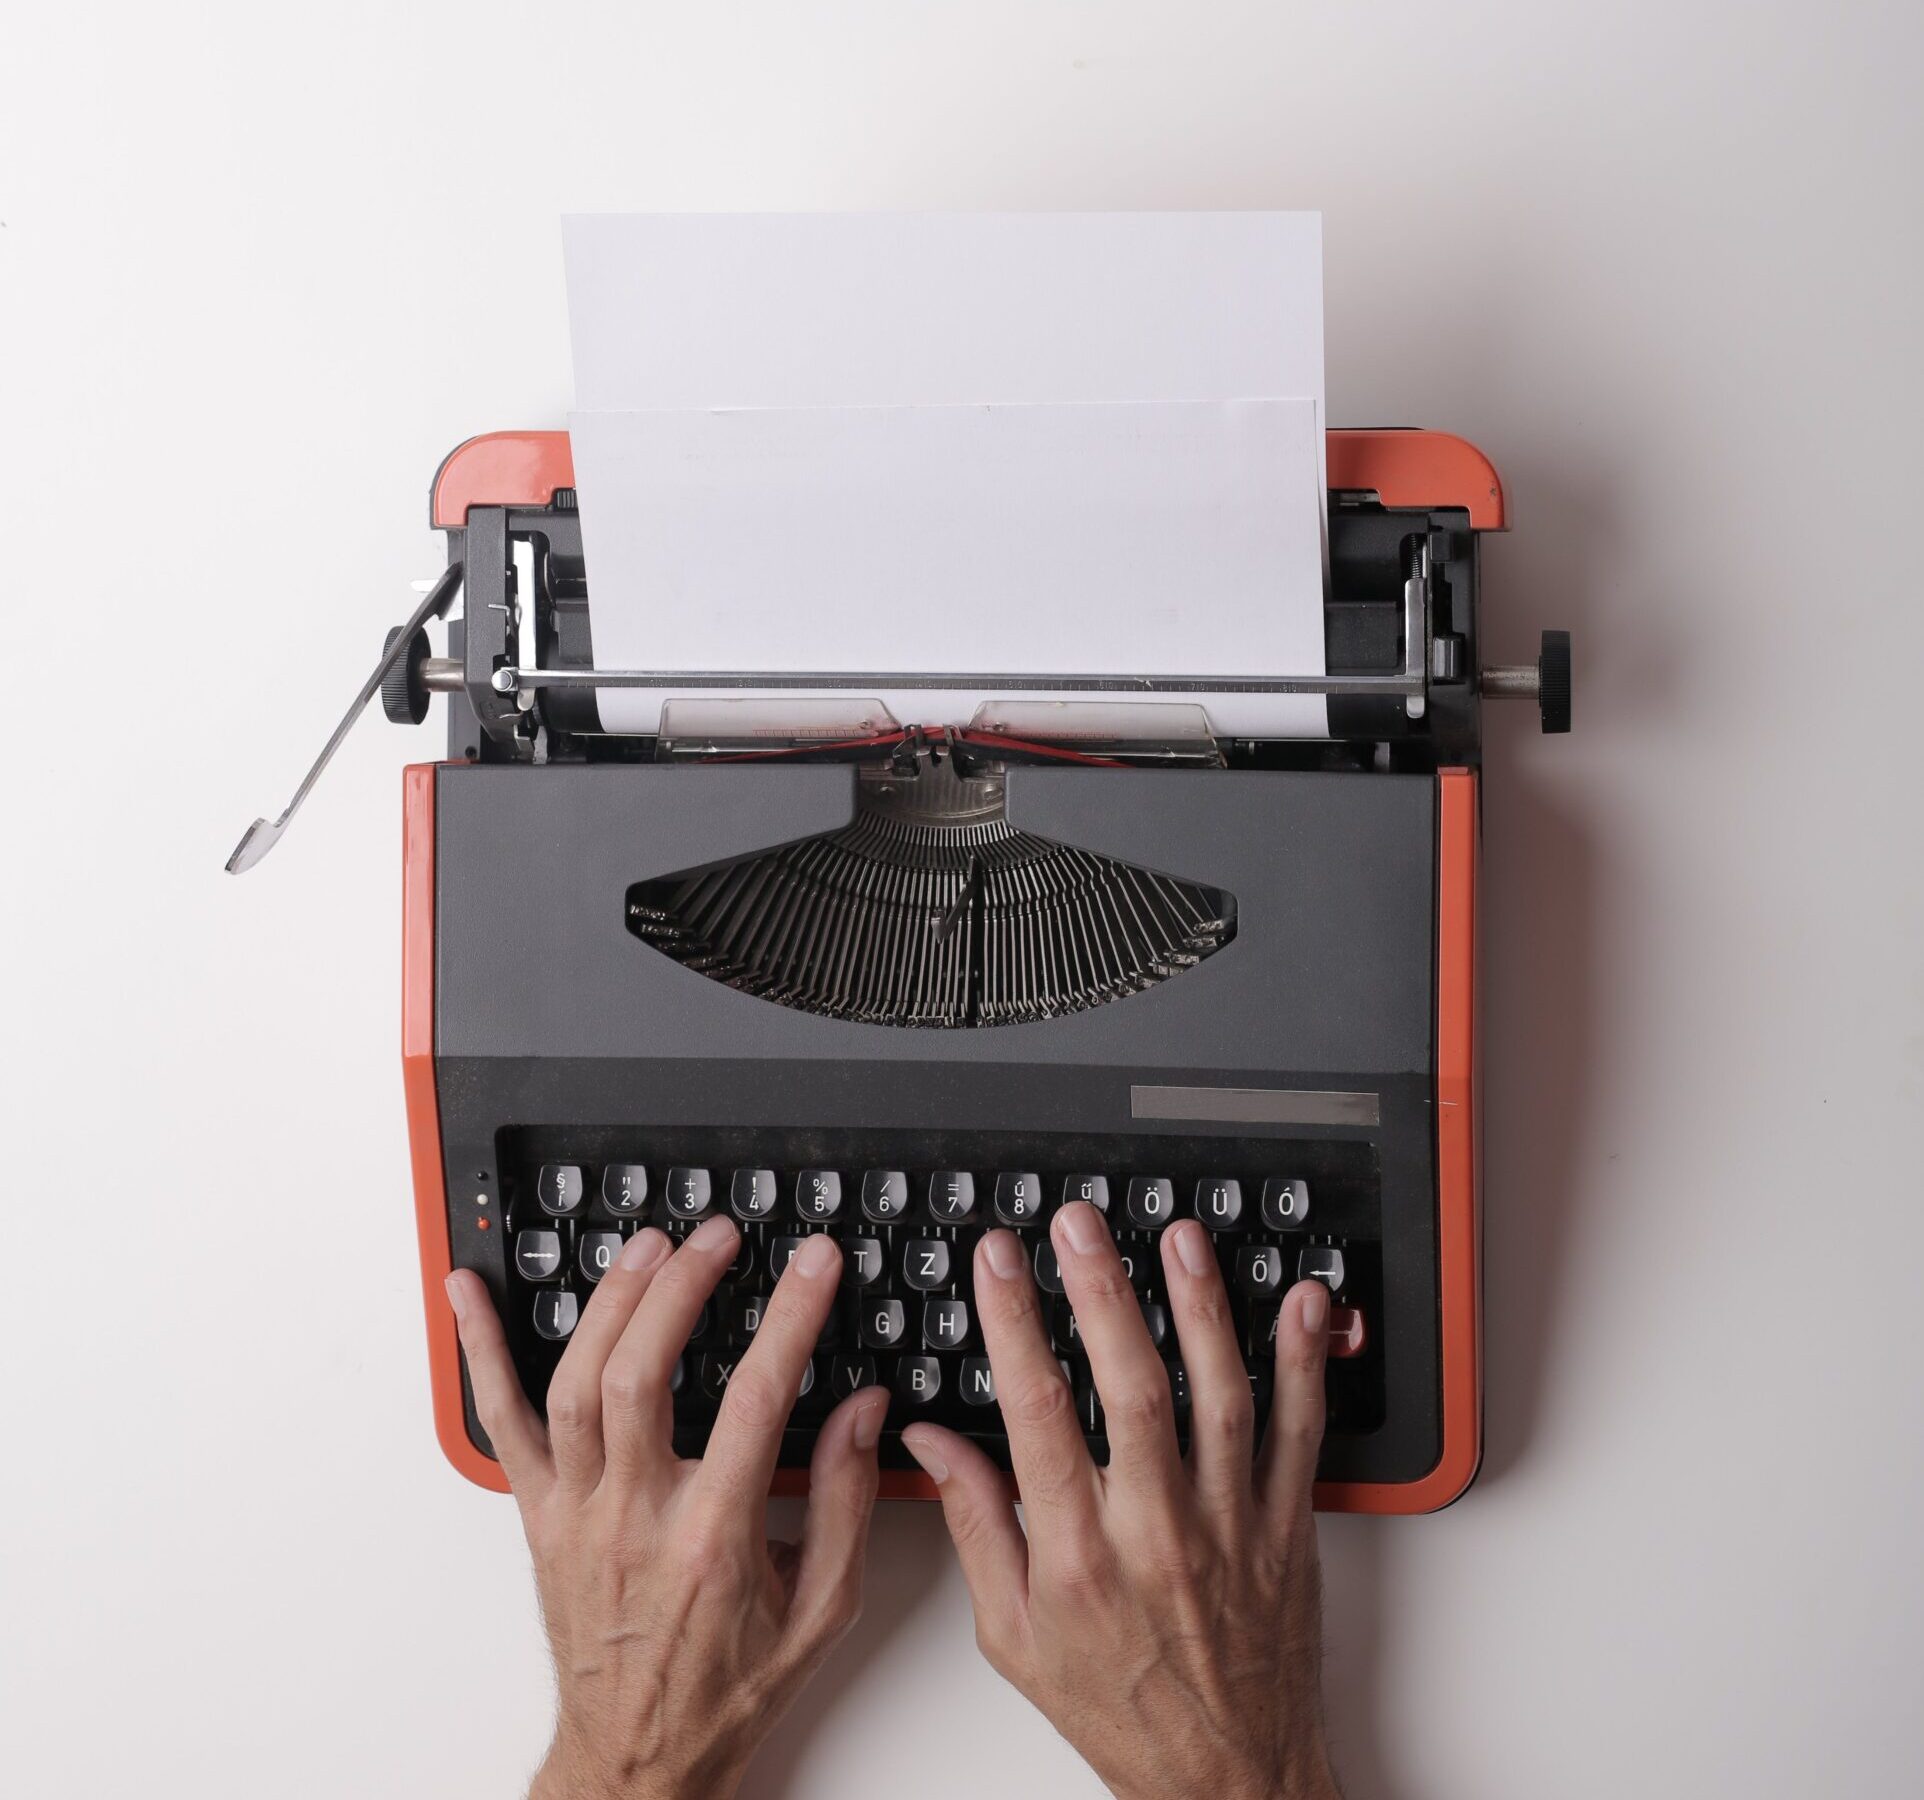 Hands typing on a typewriter